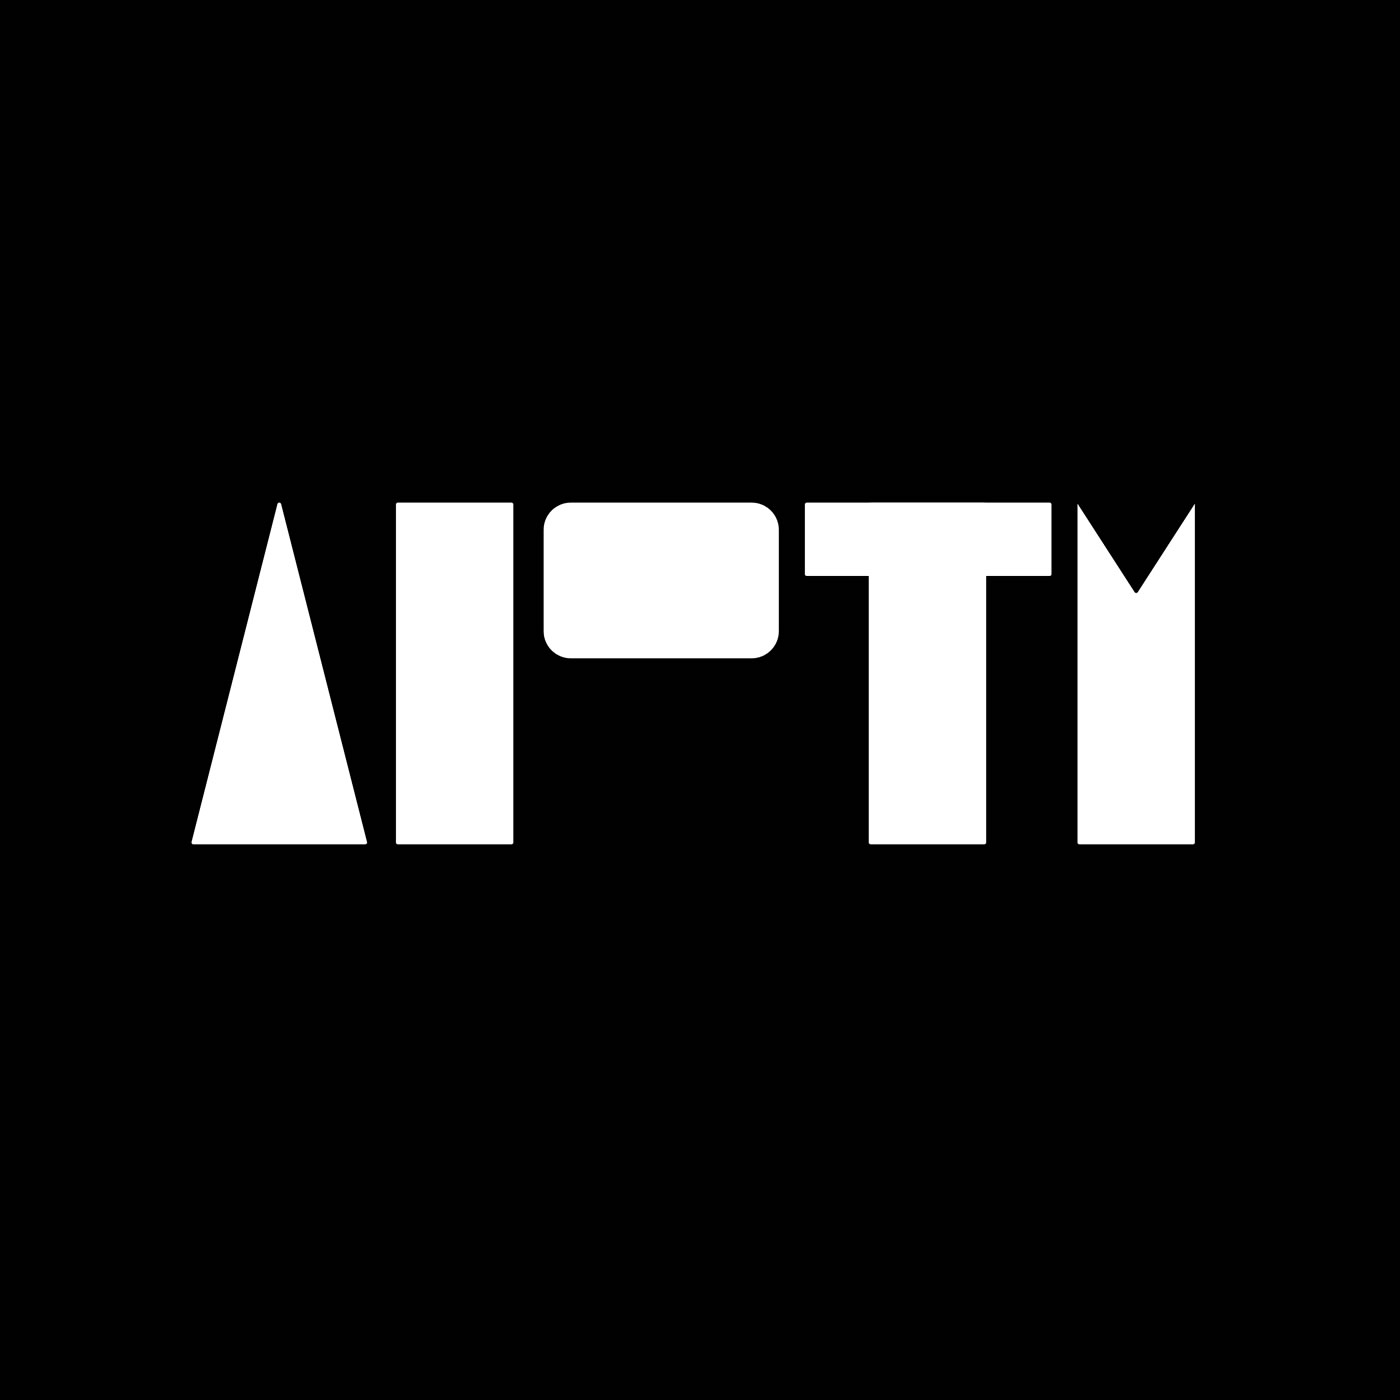 AIOTM - Video Series #5